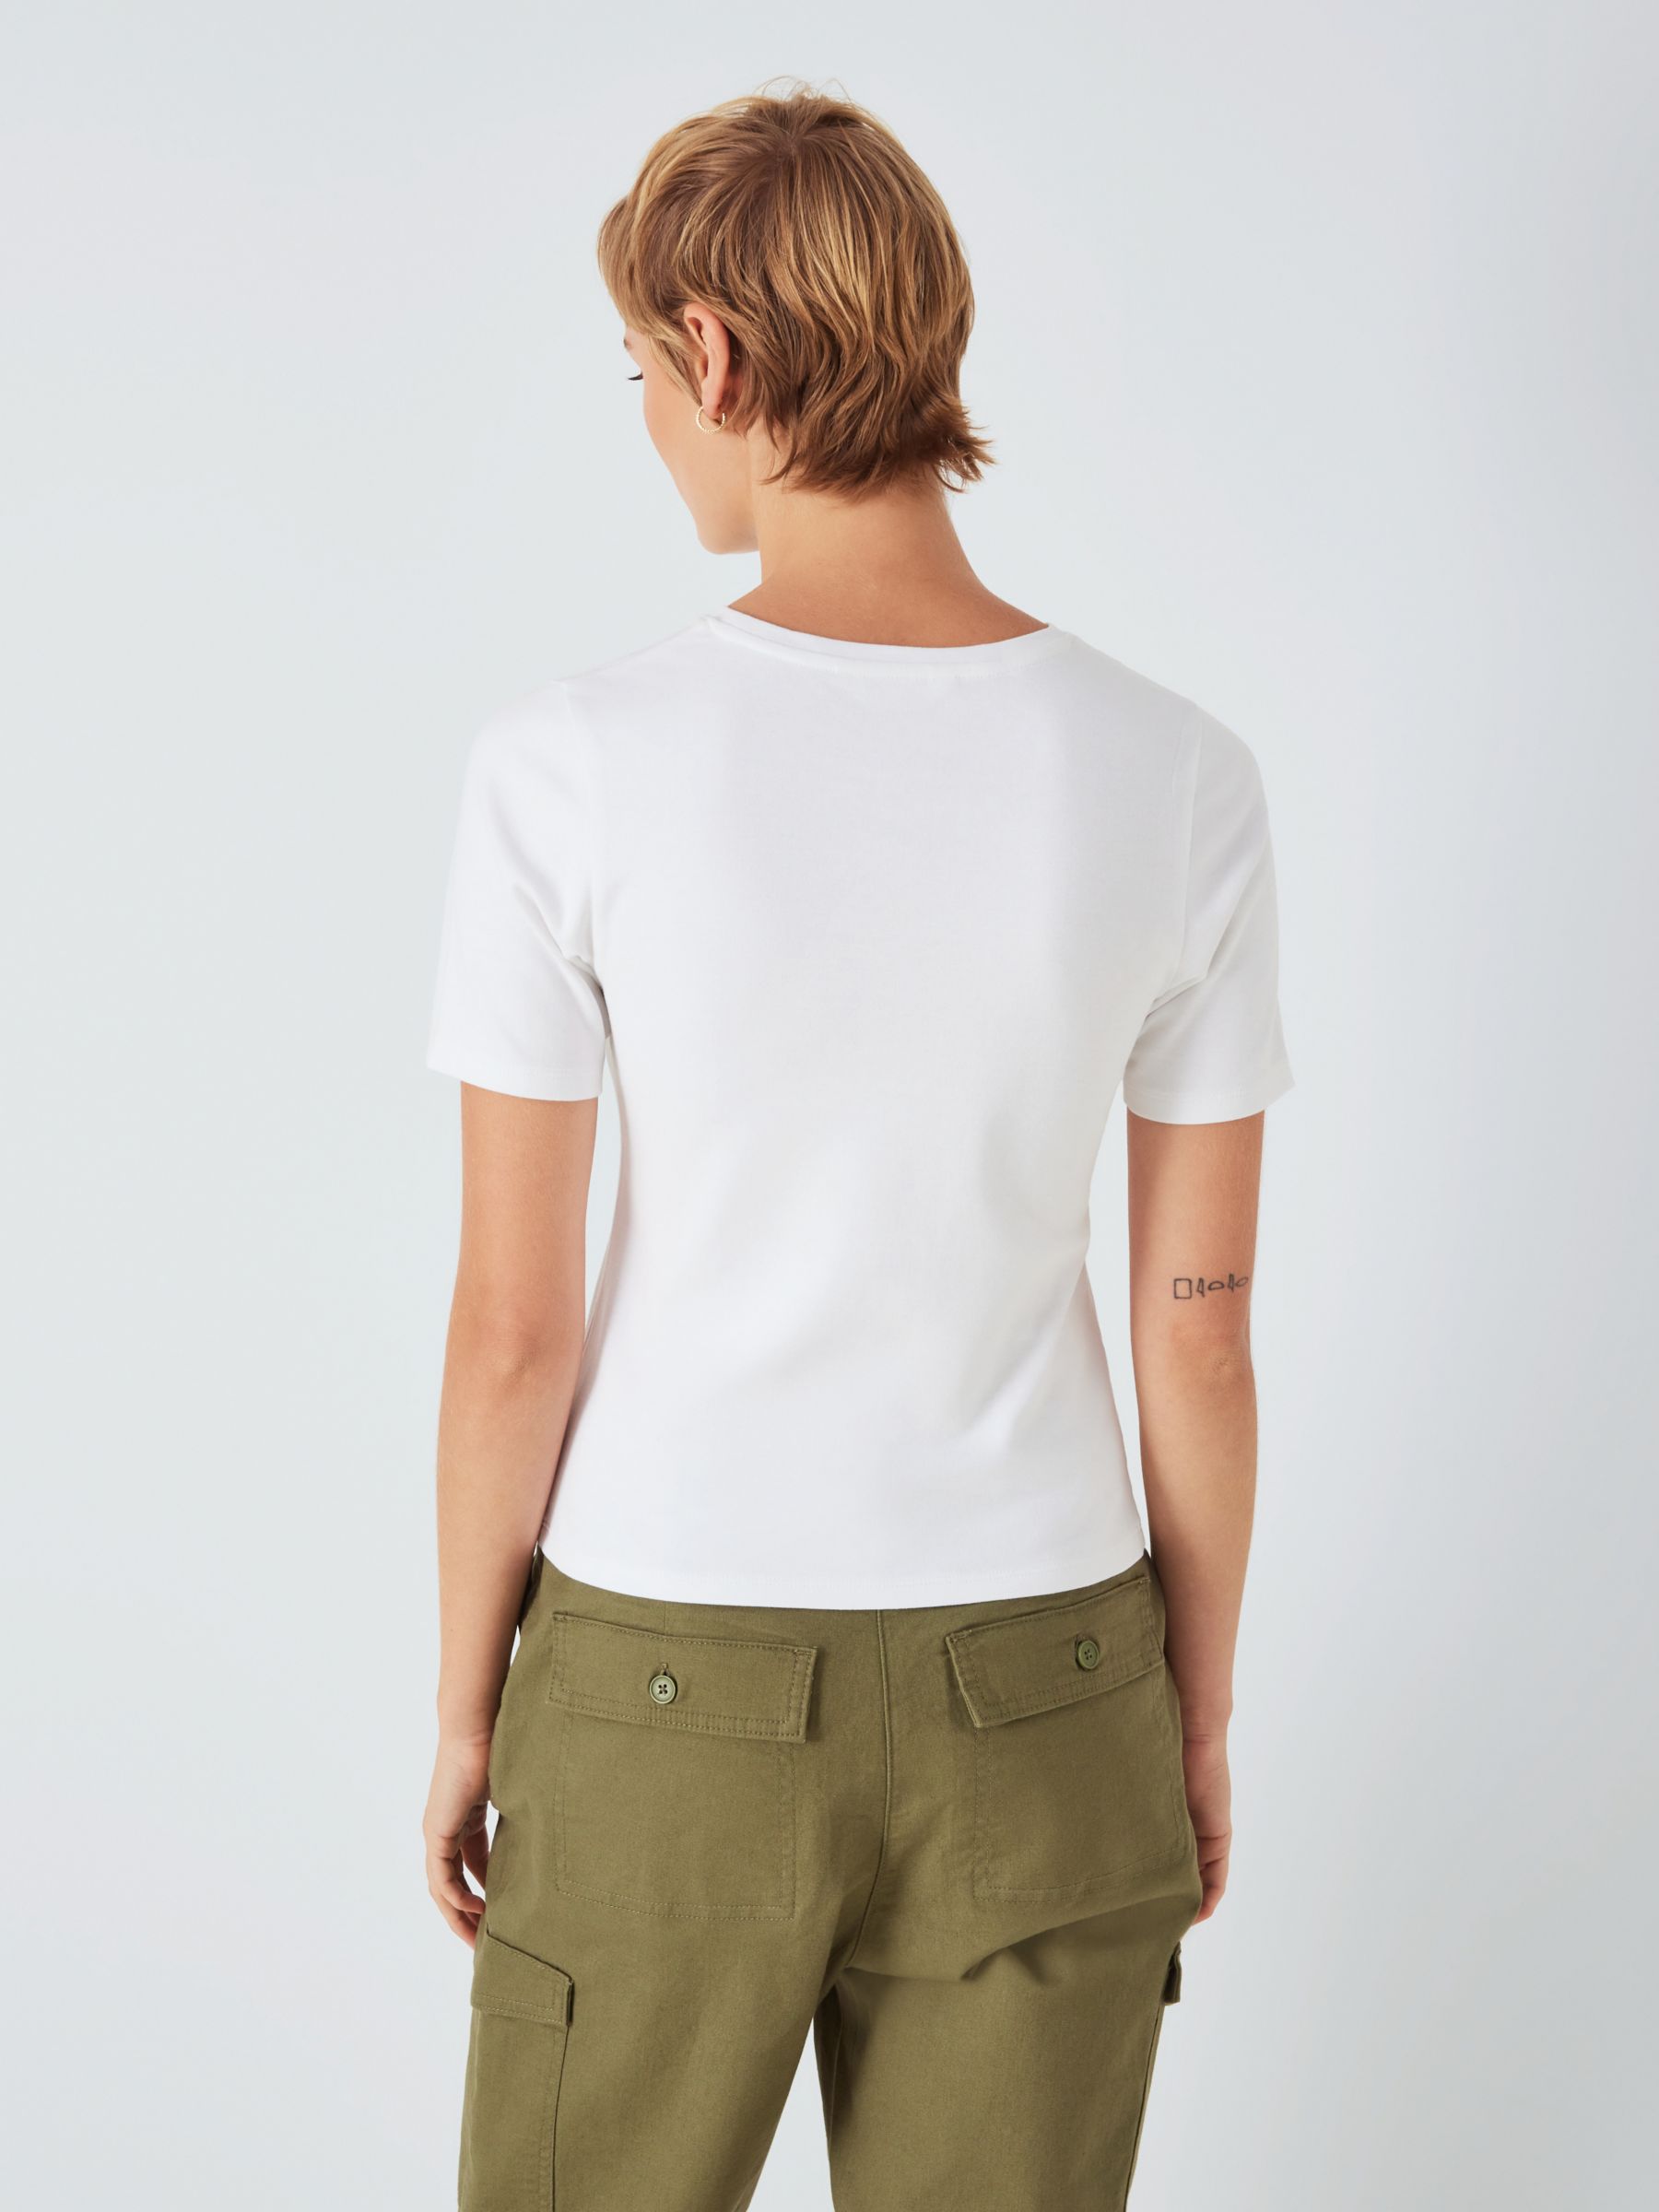 John Lewis ANYDAY Plain Slim Fit T-Shirt, White at John Lewis & Partners